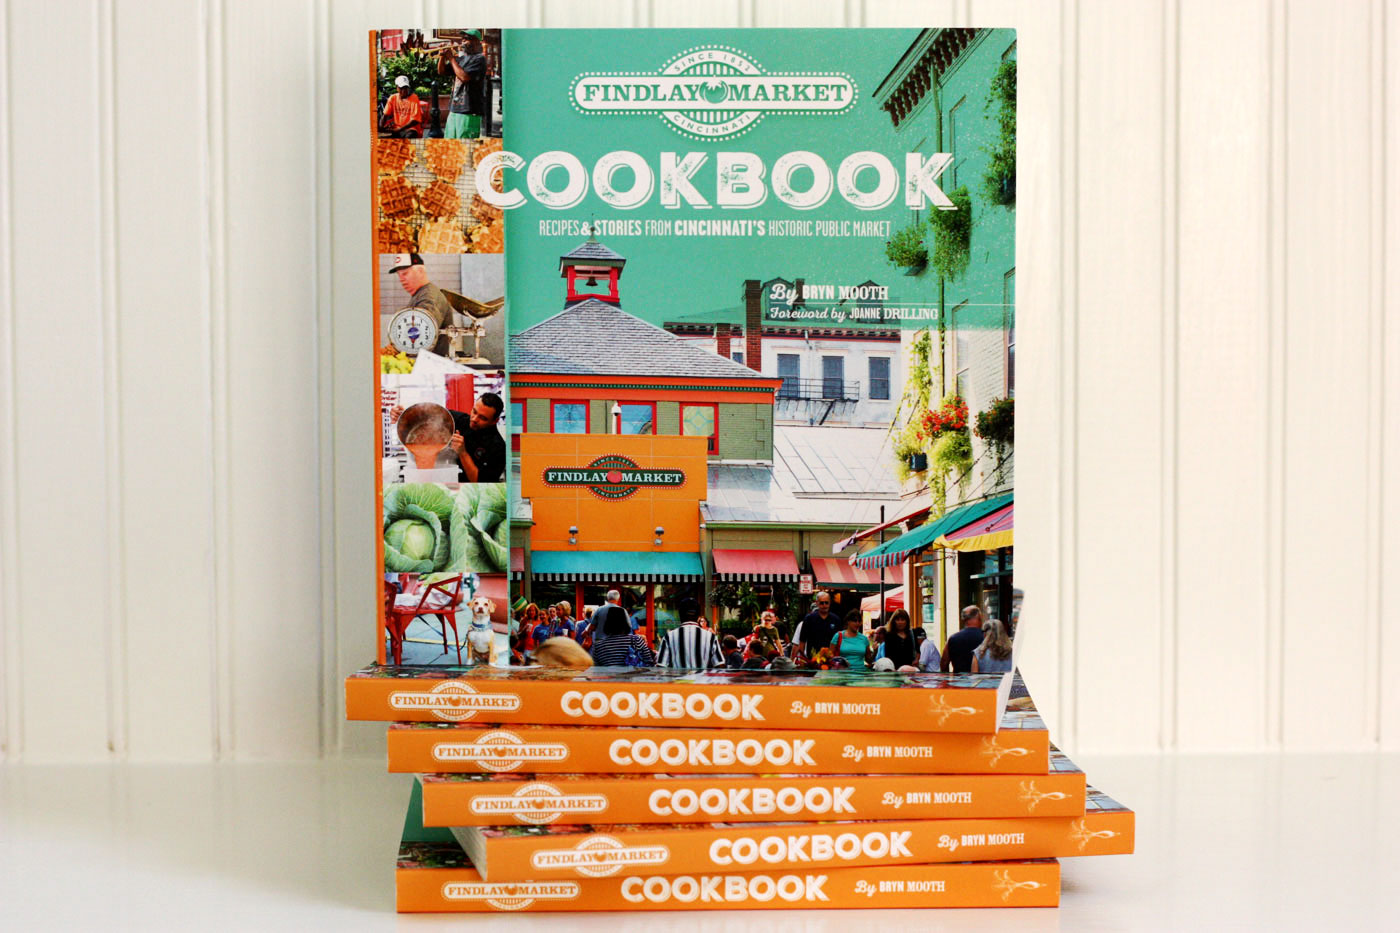 The Findlay Market Cookbook